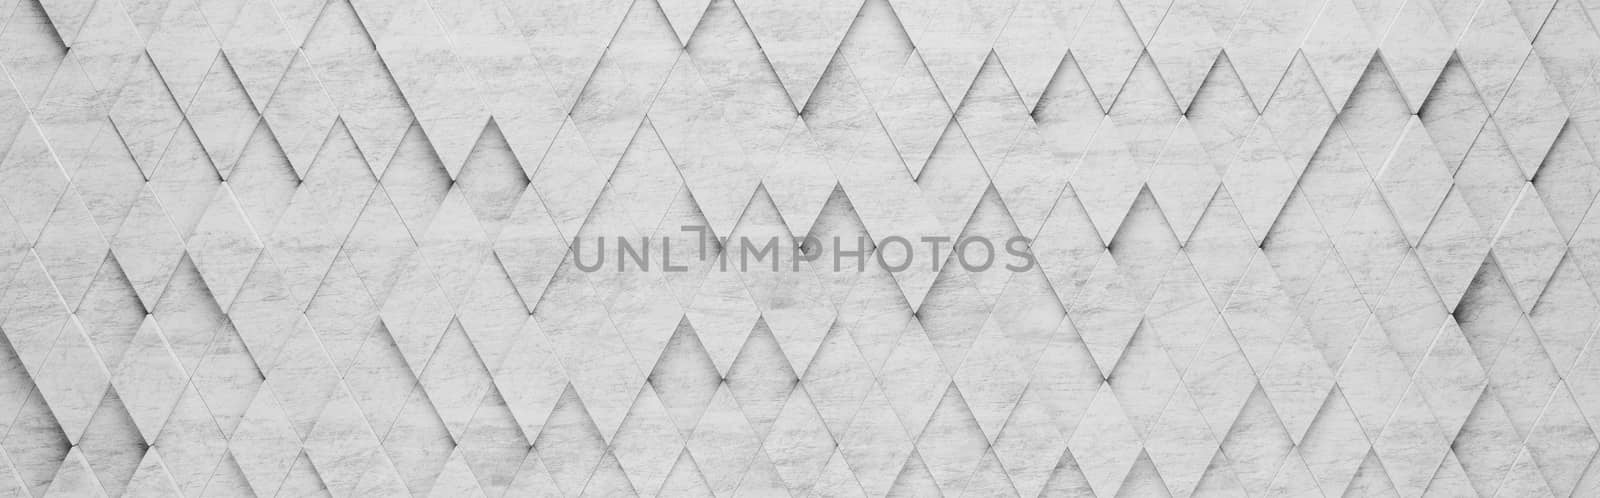 Wall of Gray Rhombus Tiles Arranged in Random Height 3D Pattern Background Illustration